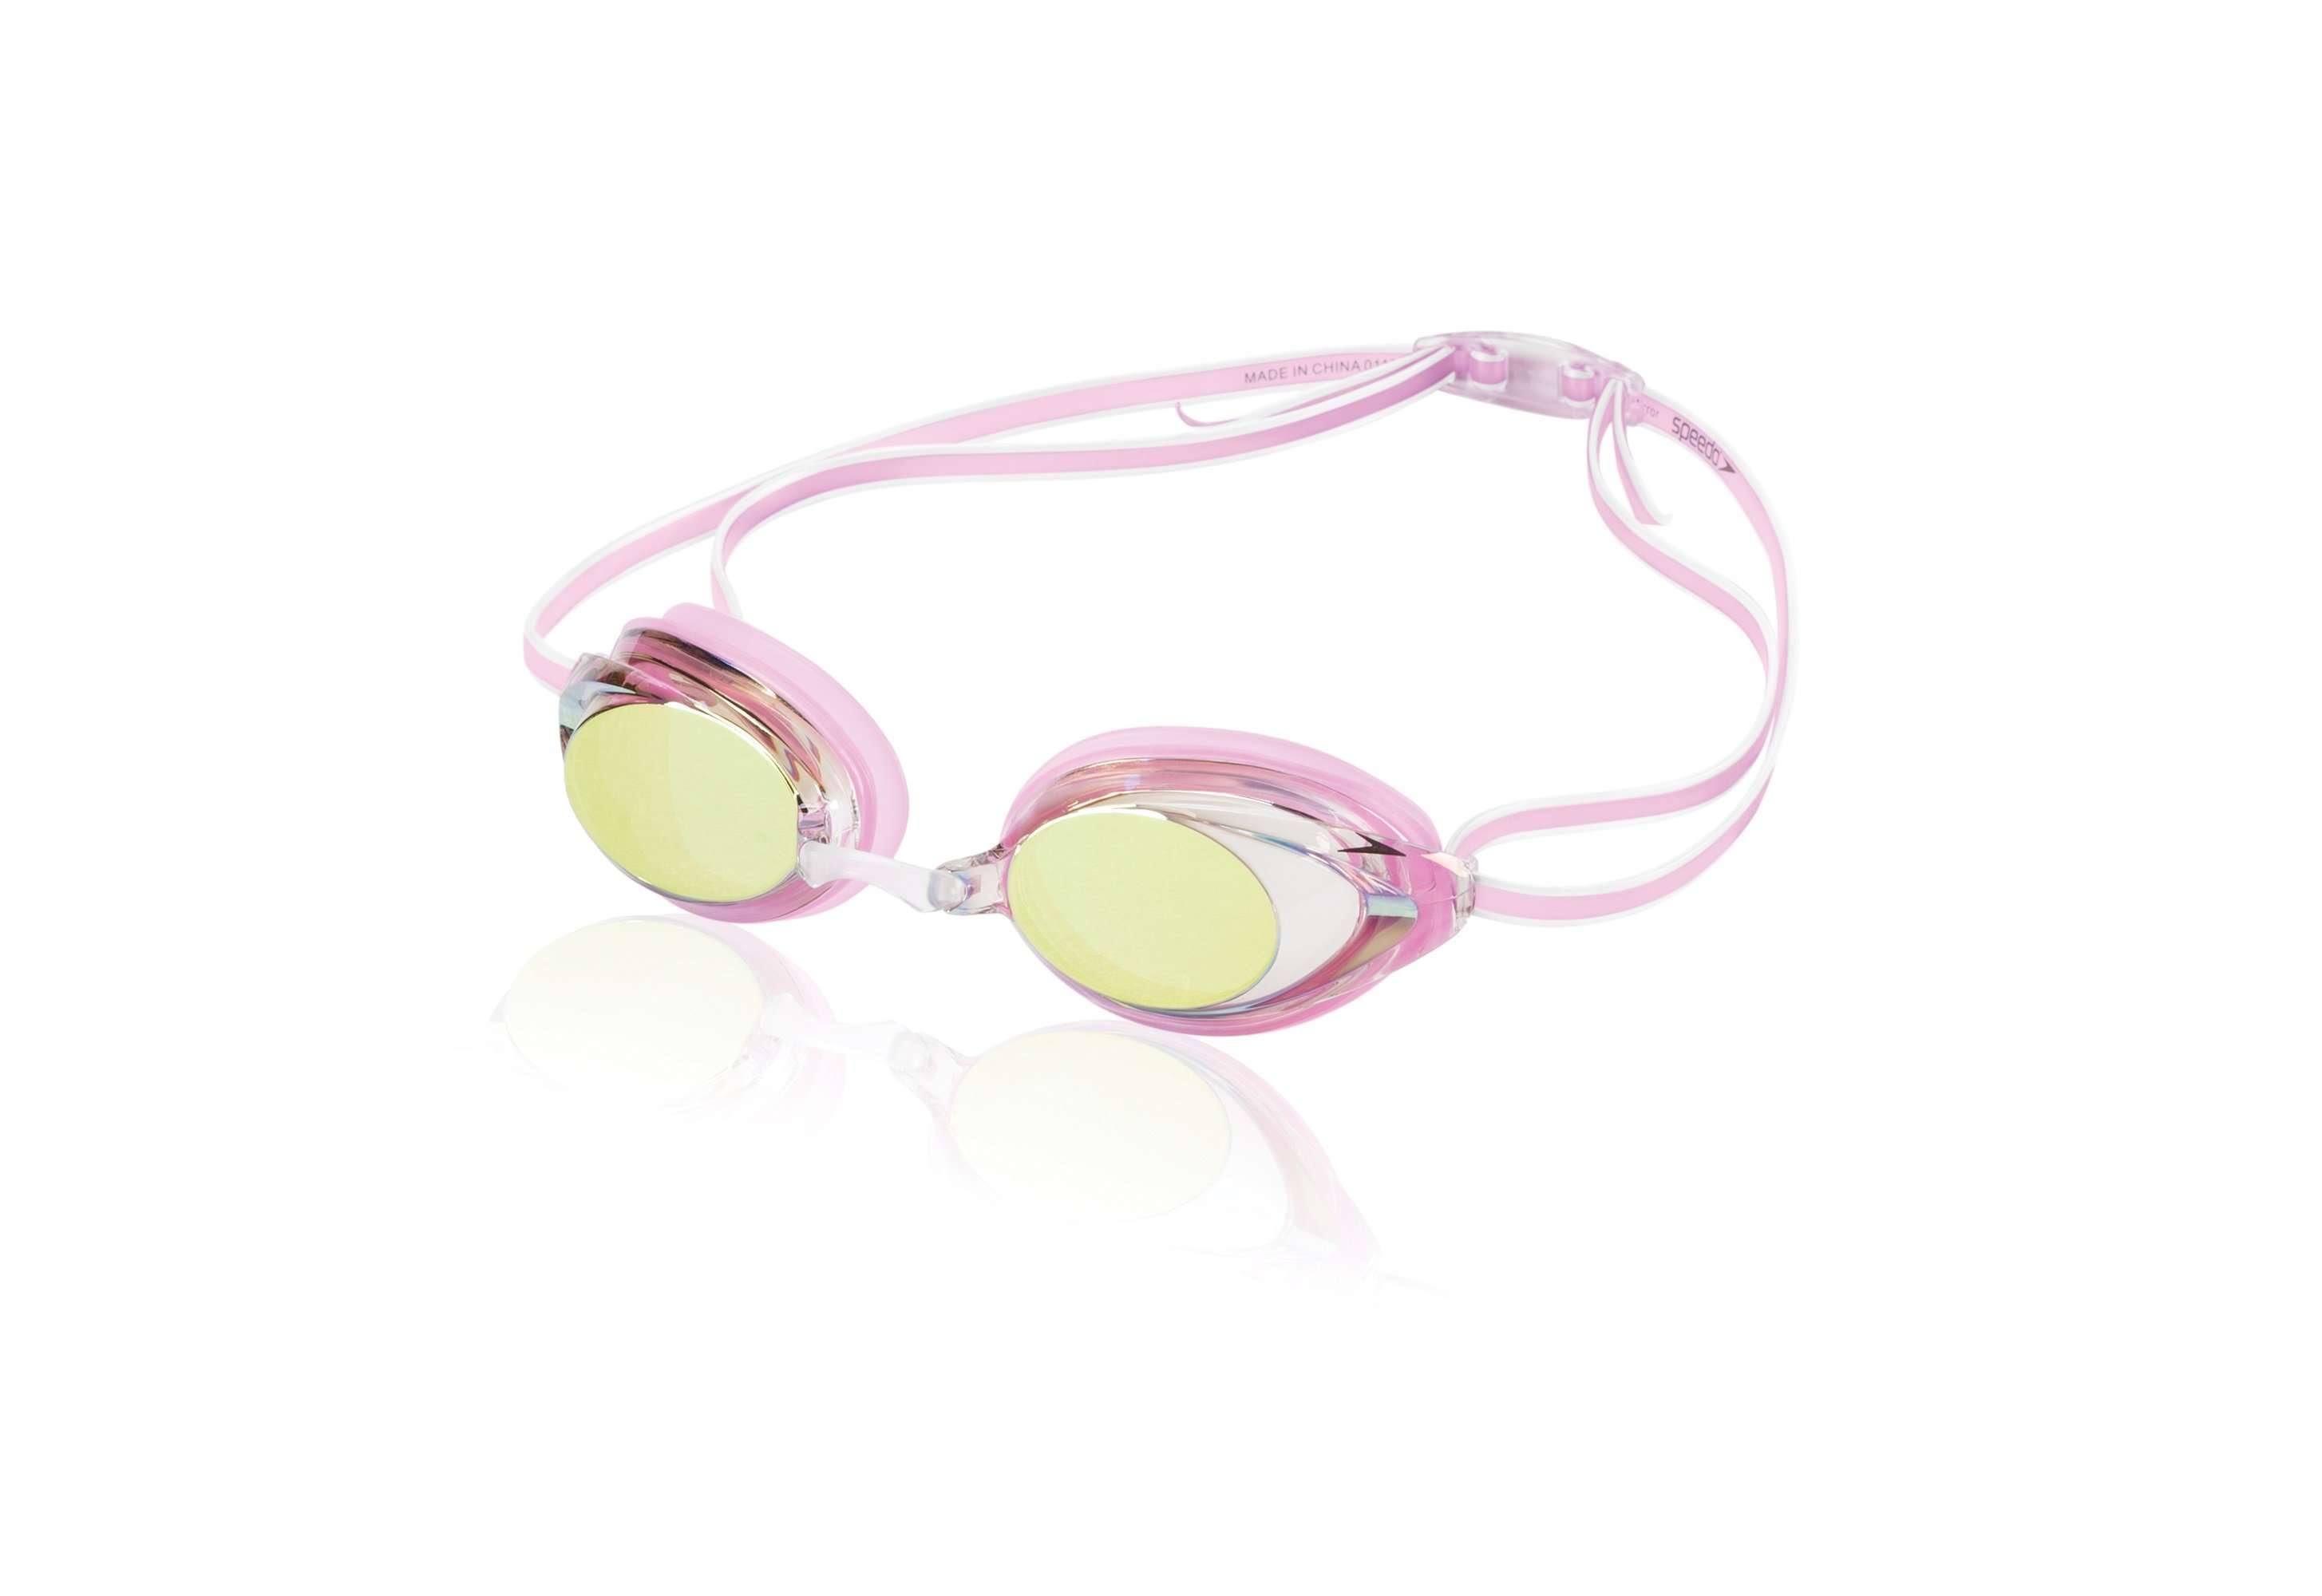 Speedo Women's Vanquisher 2.0 Mirrored Goggles - Pink, One Size